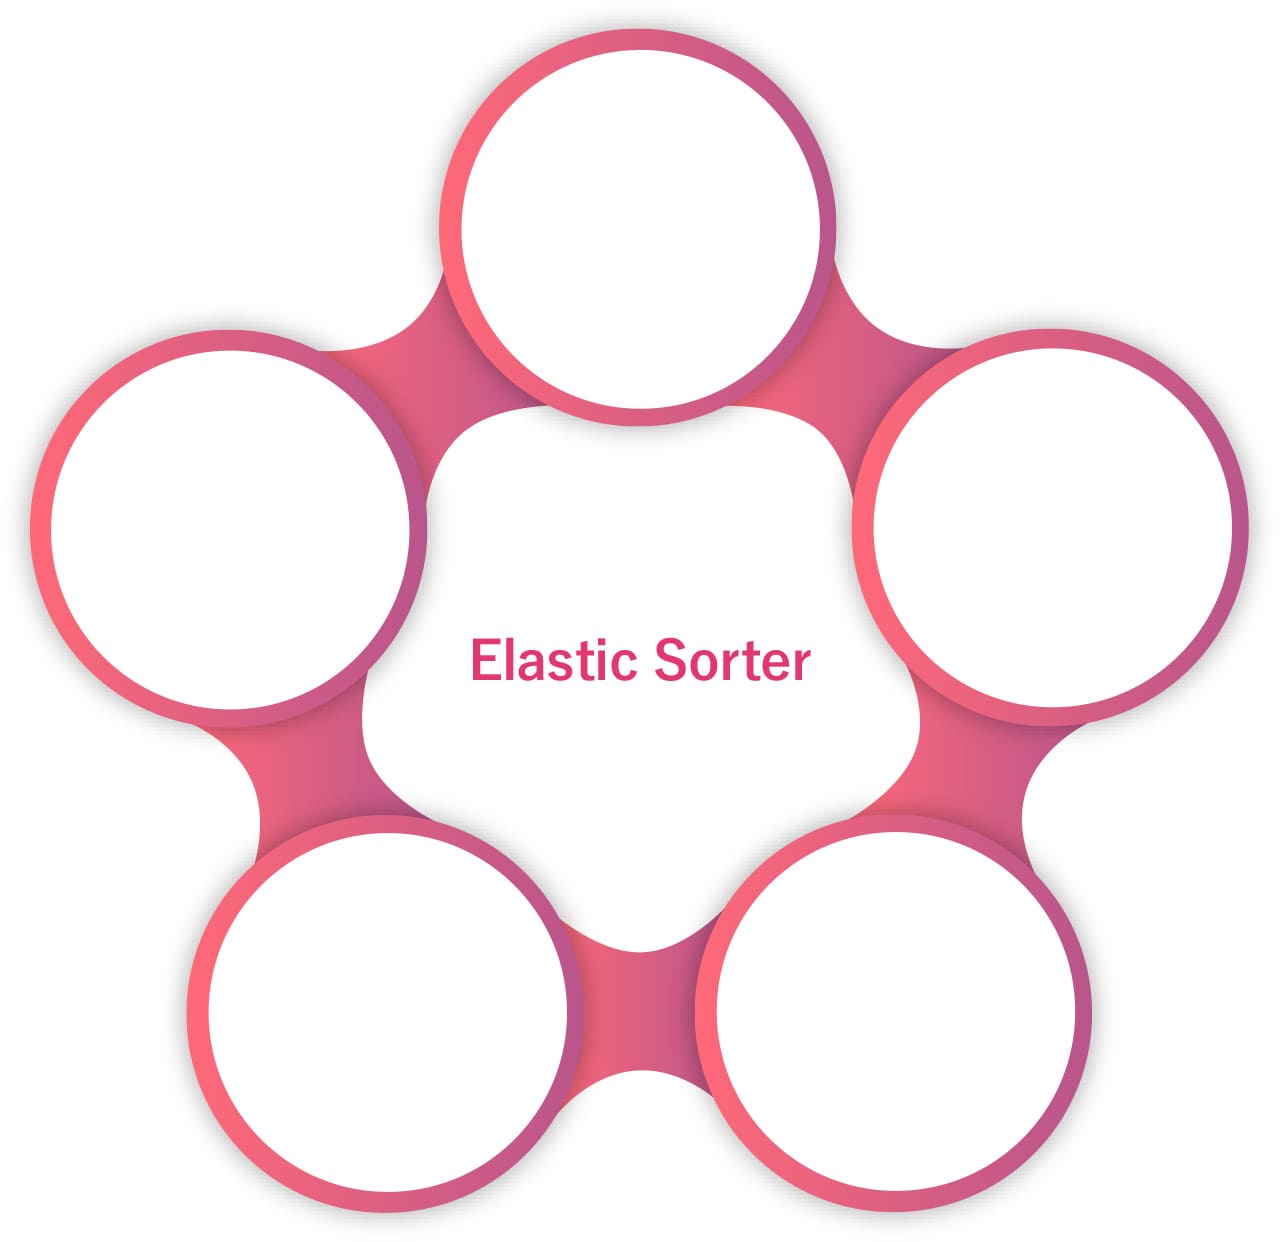 Elastic Sorter5大機能